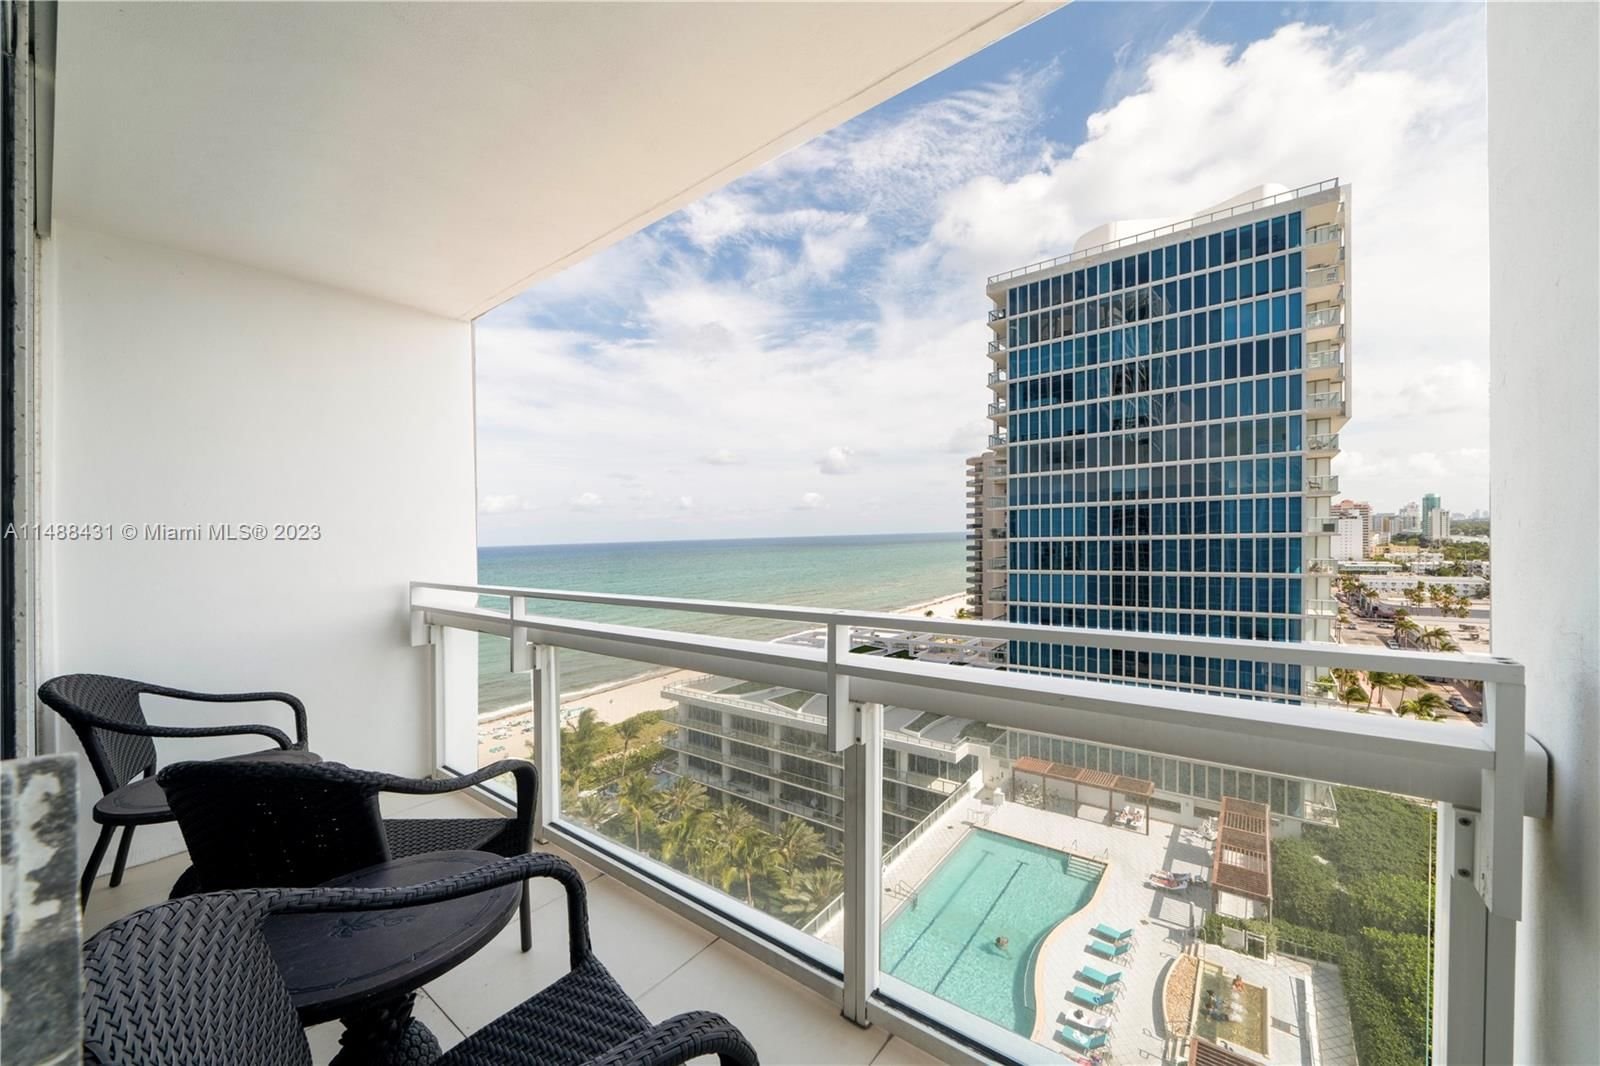 Real estate property located at 6801 Collins Ave LPH04, Miami-Dade County, CENTRAL CARILLON BEACH CO, Miami Beach, FL